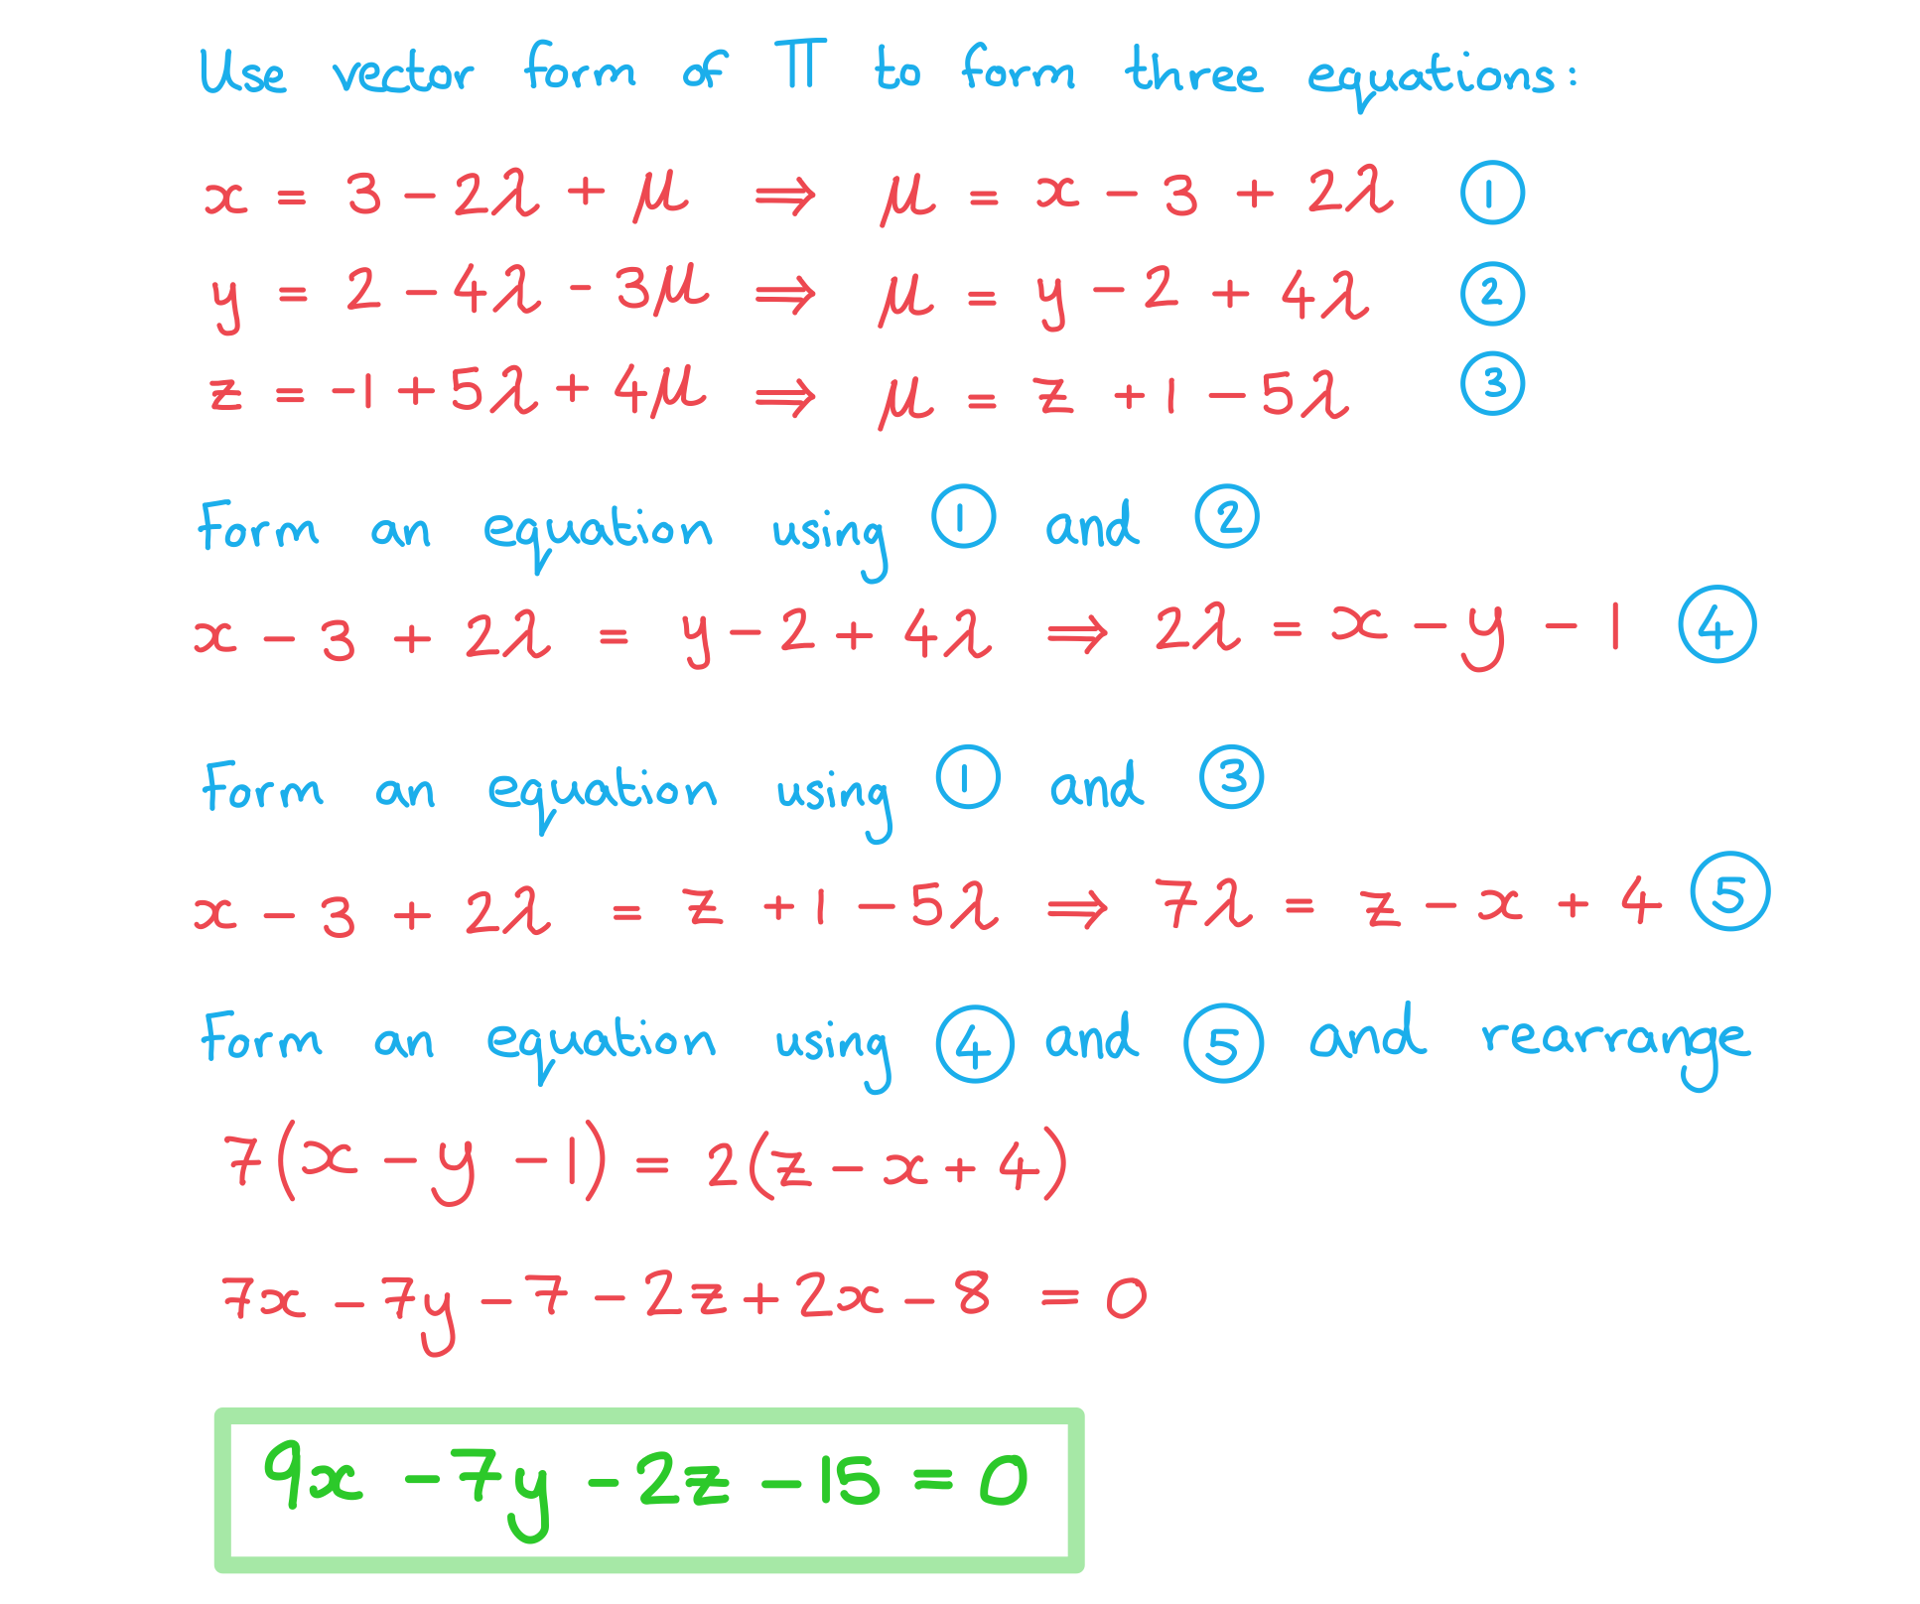 al-fm-6-2-1-equation-of-plane-in-cartesian-form-we-solution